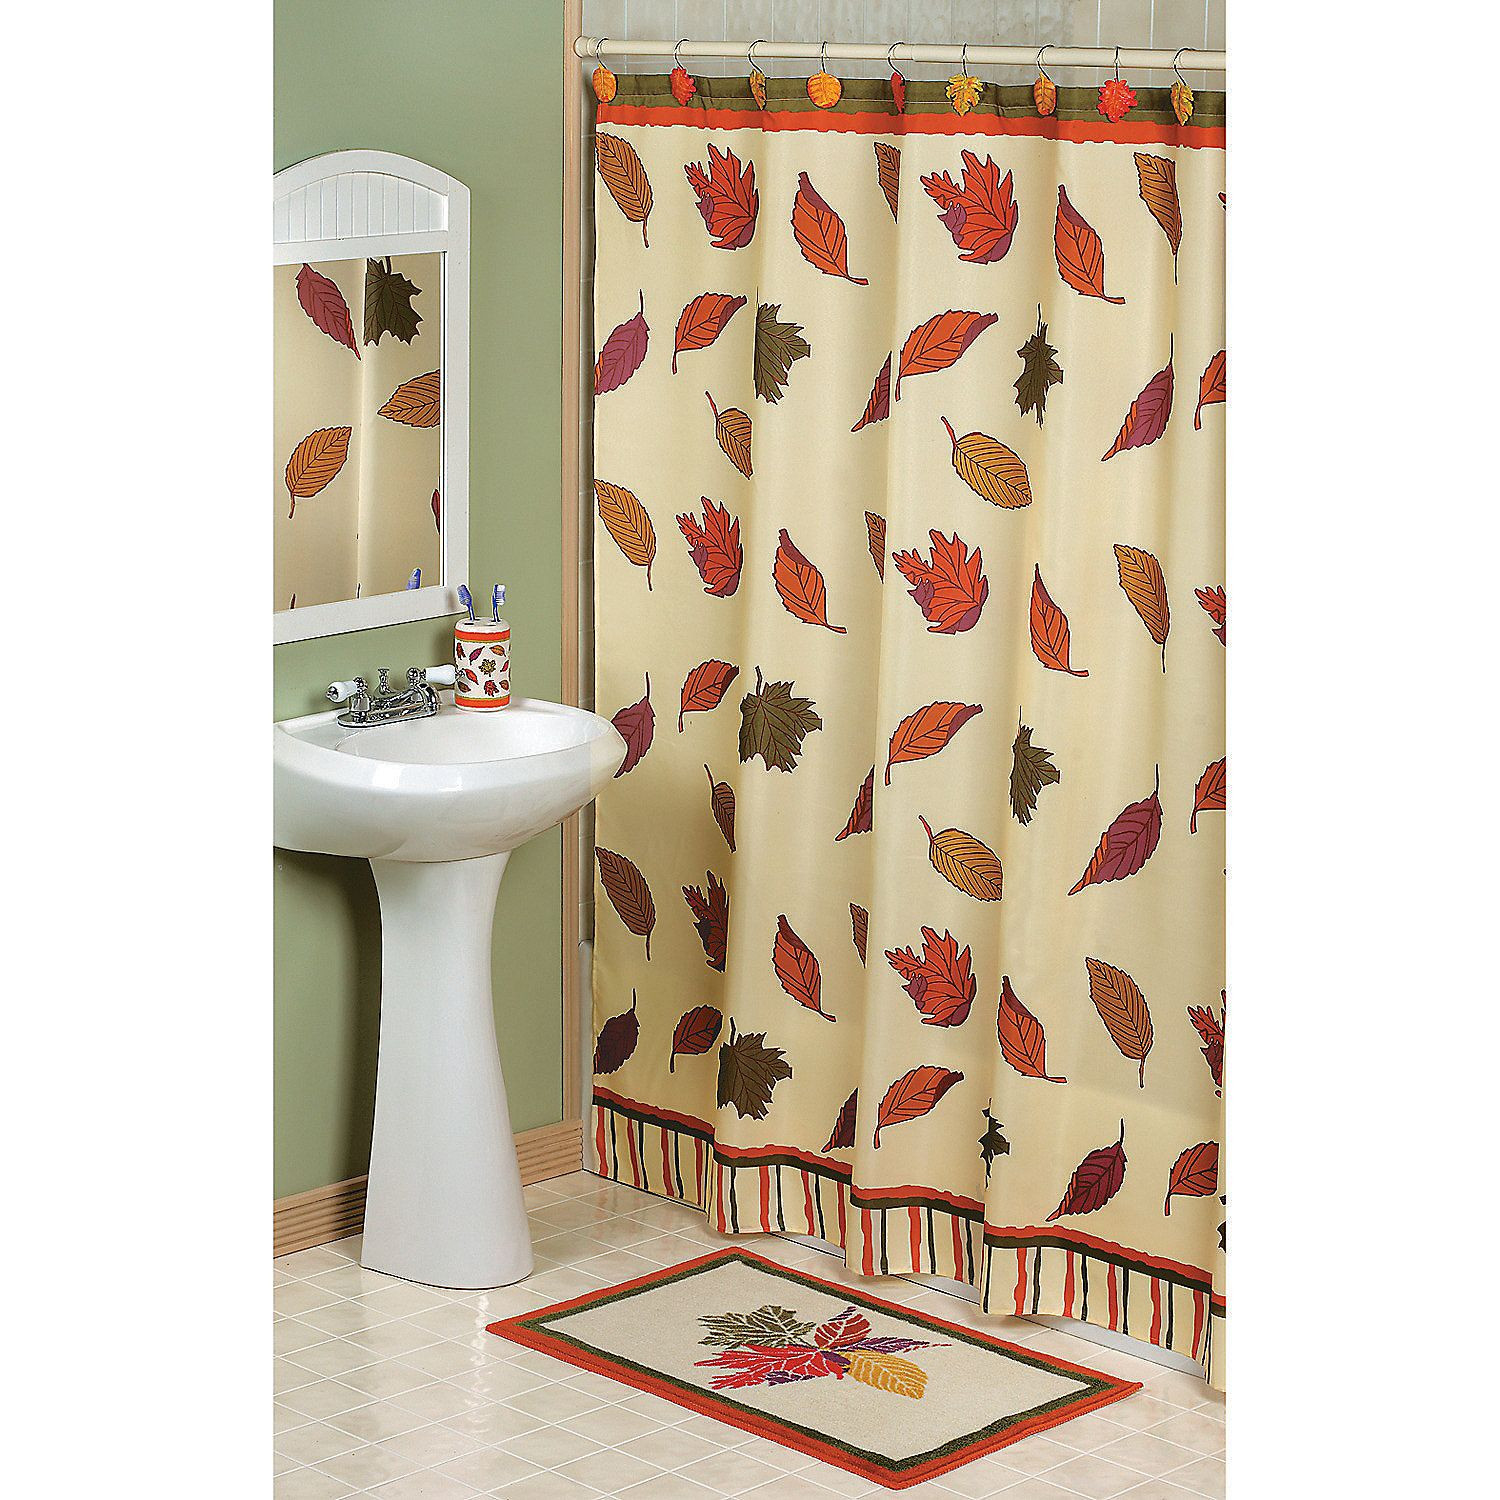 Thanksgiving Bathroom Set
 Fall Leaves Shower Curtain TerrysVillage